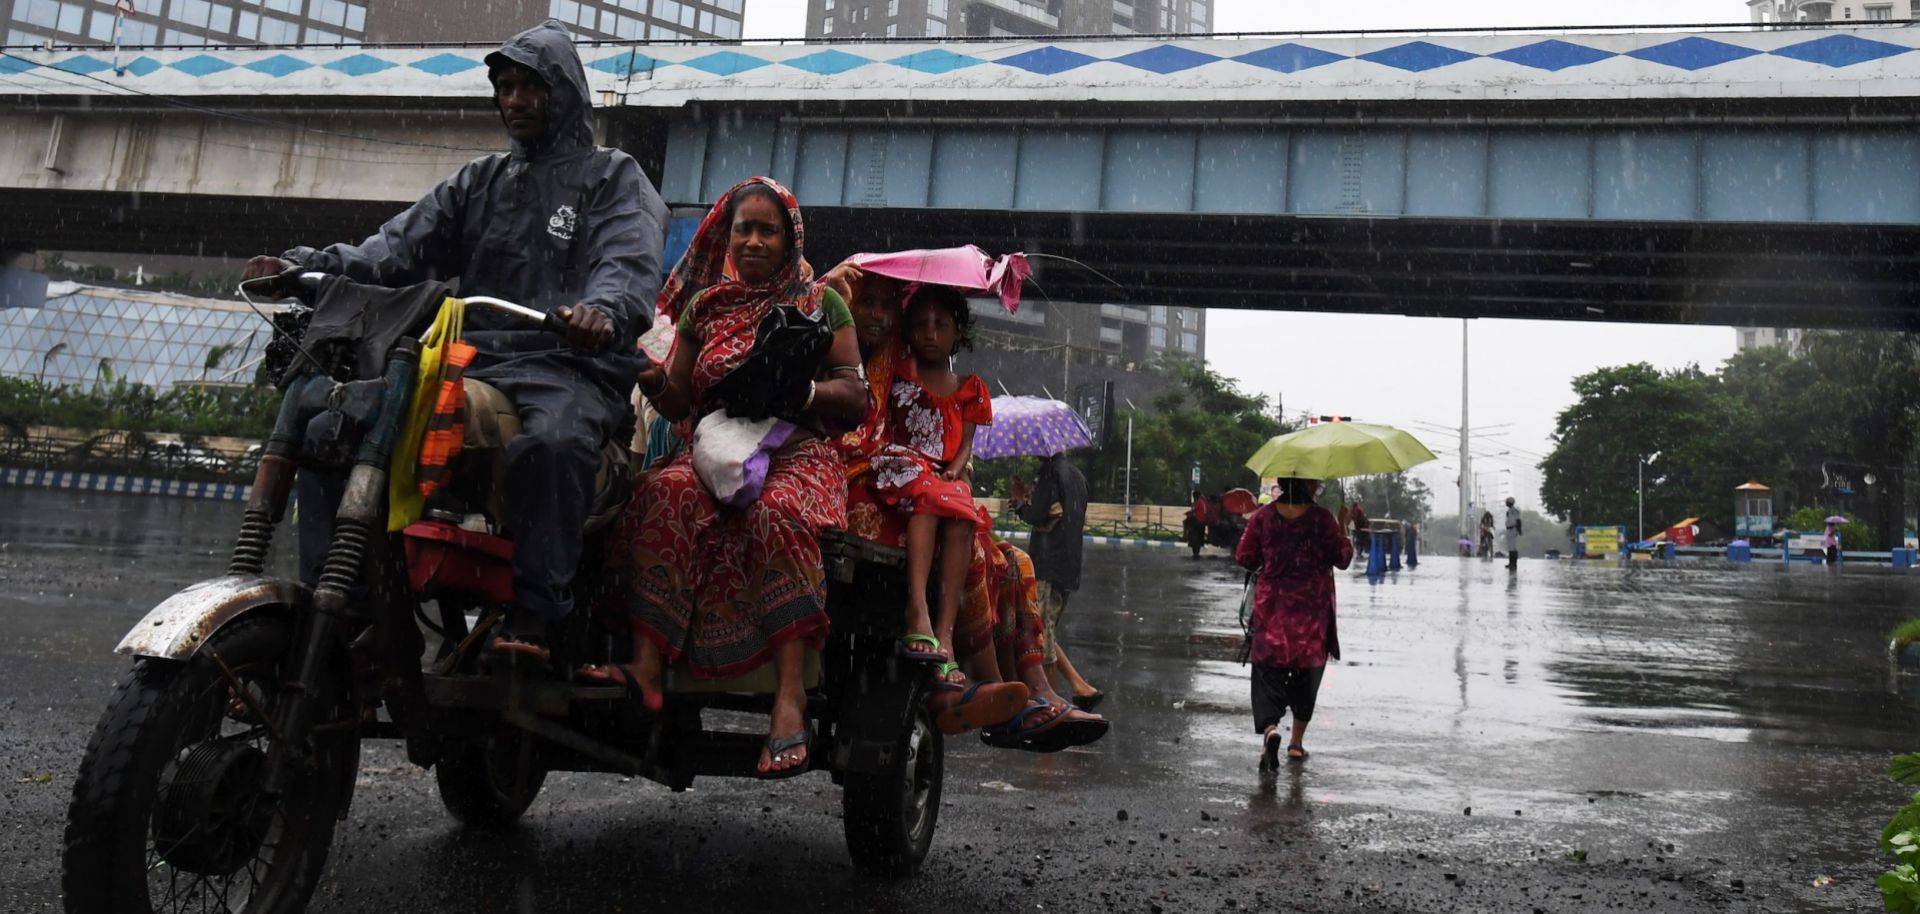 Passengers in Kolkata make their daily commute through a monsoon July 24, 2017.